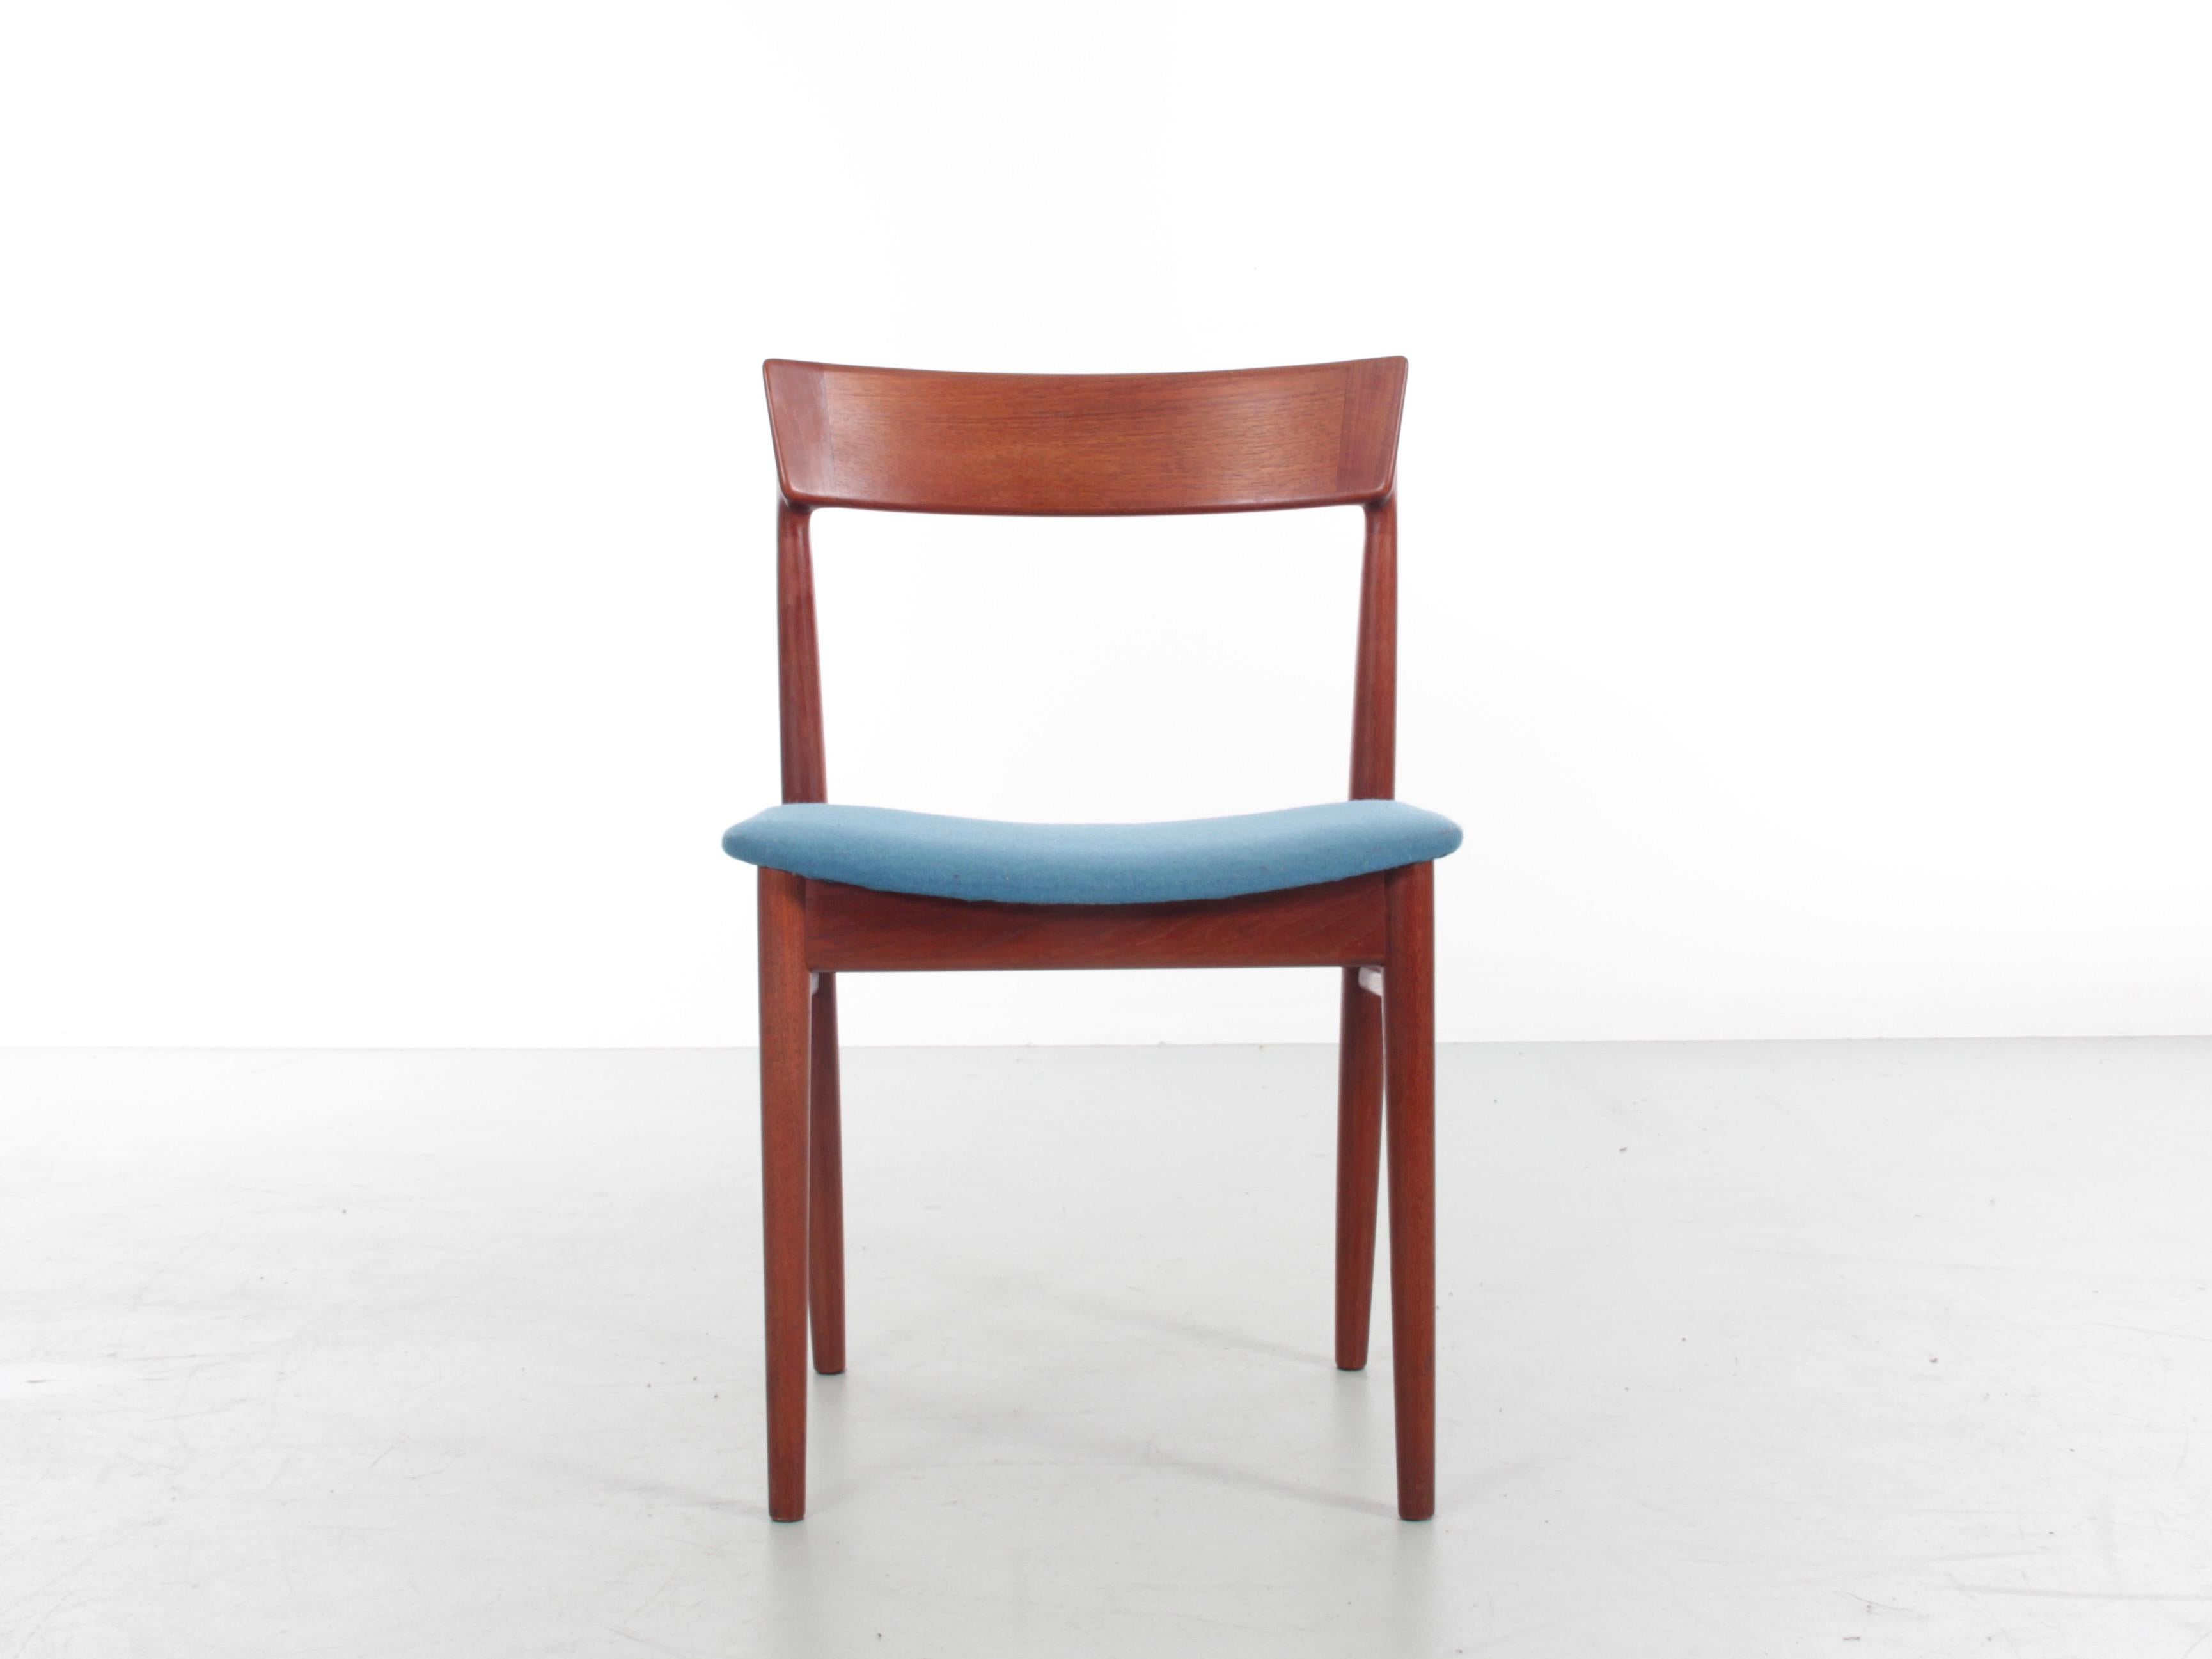 Scandinavian Modern Mid-Century Modern Scandinavian Pair of Chairs in Teak by Harry Rosengren Hansen